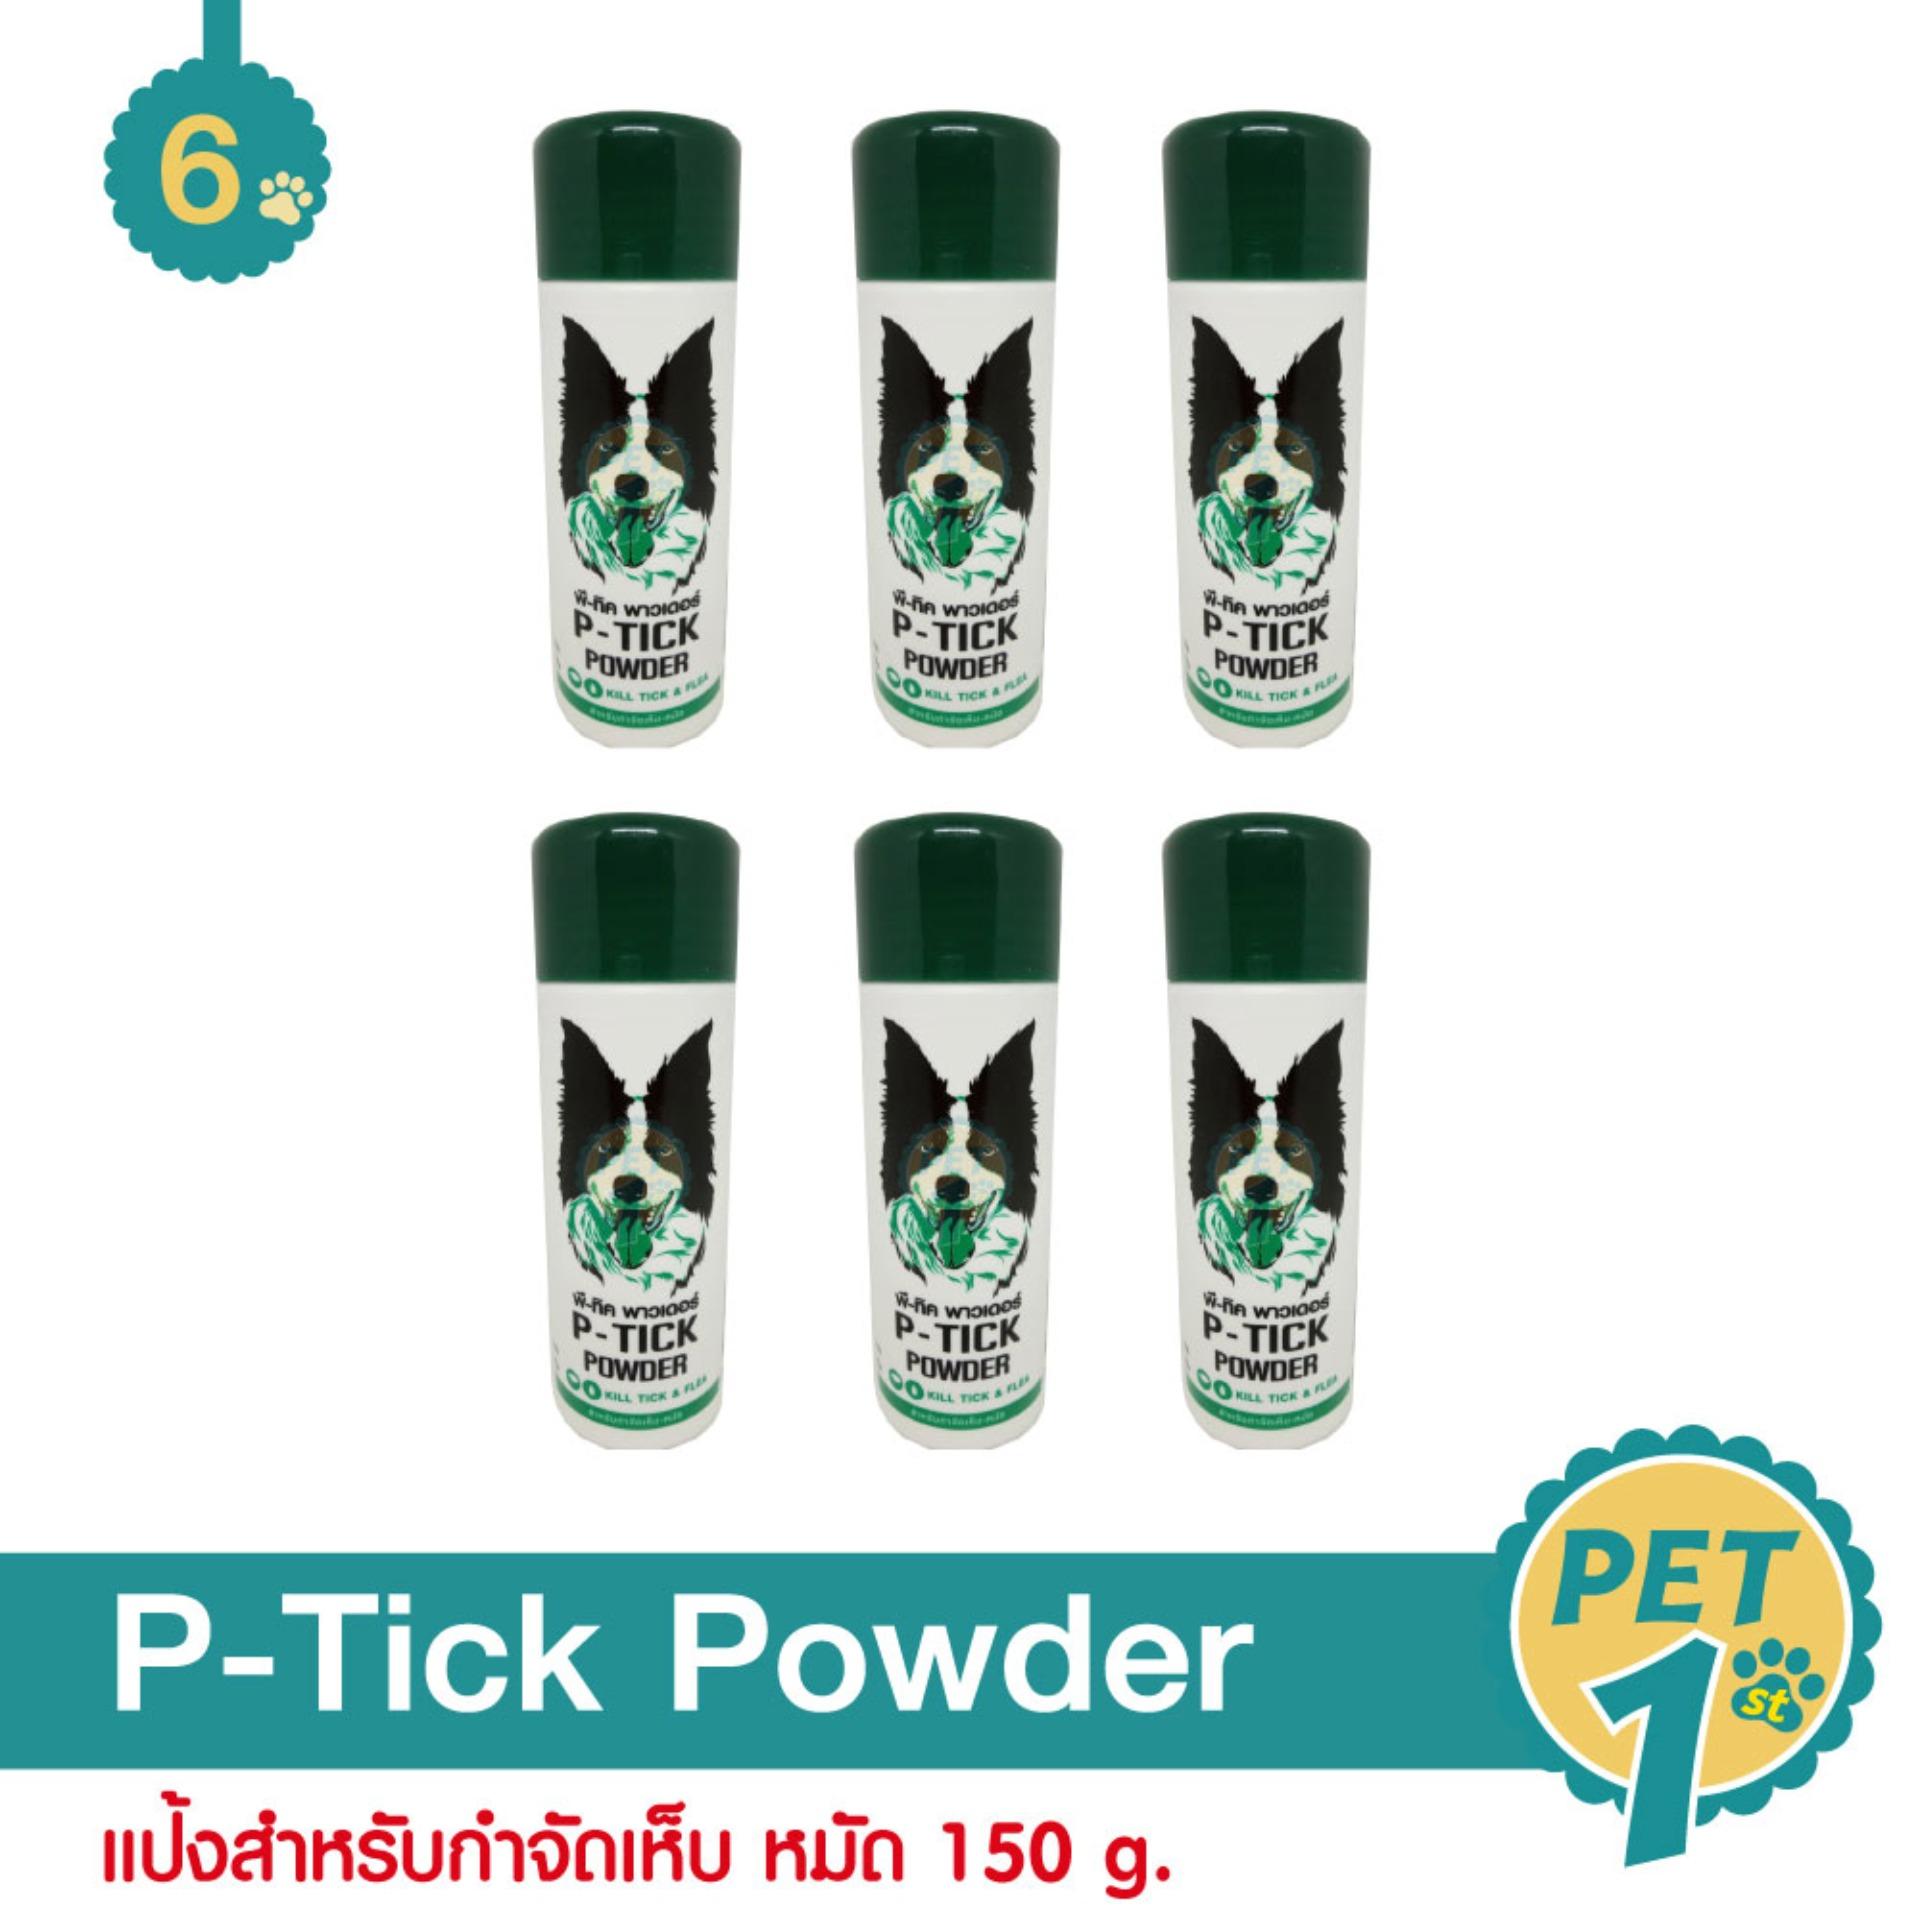 P-Tick Powder แป้งสำหรับกำจัดเห็บ หมัด 150 g. - 6 ขวด